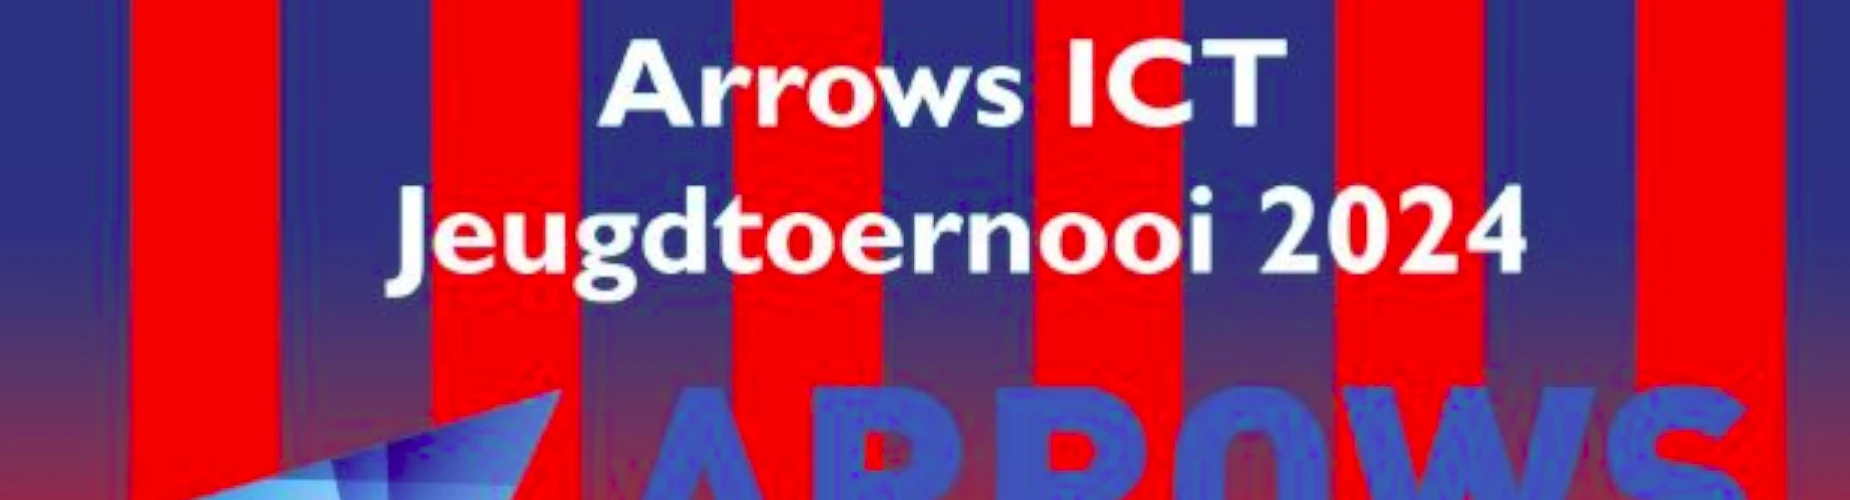 Banner - Arrows ICT Jeugdtoernooi 2024 - RKVB - Baexem